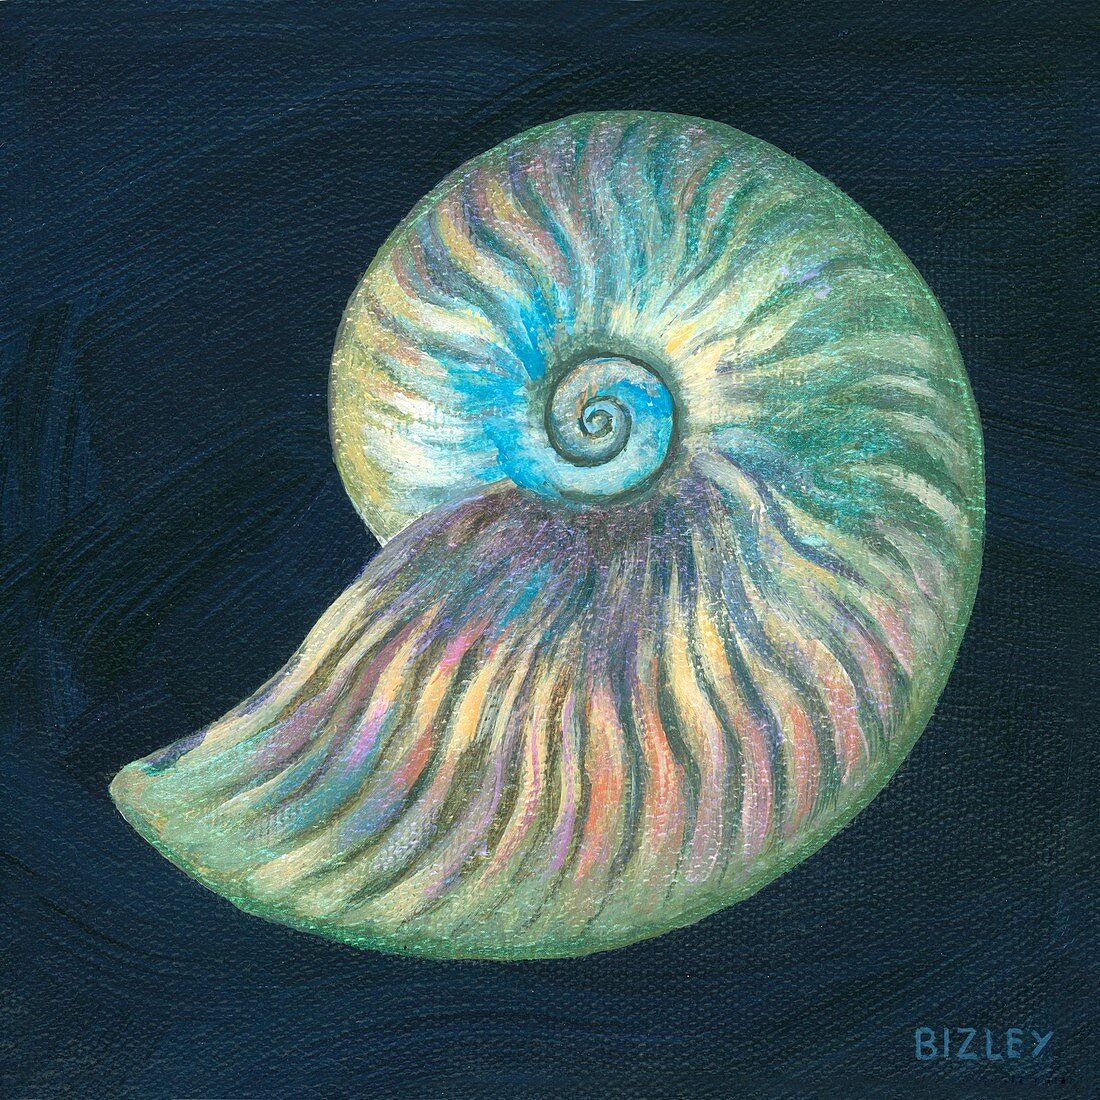 Fossil nautilus, illustration